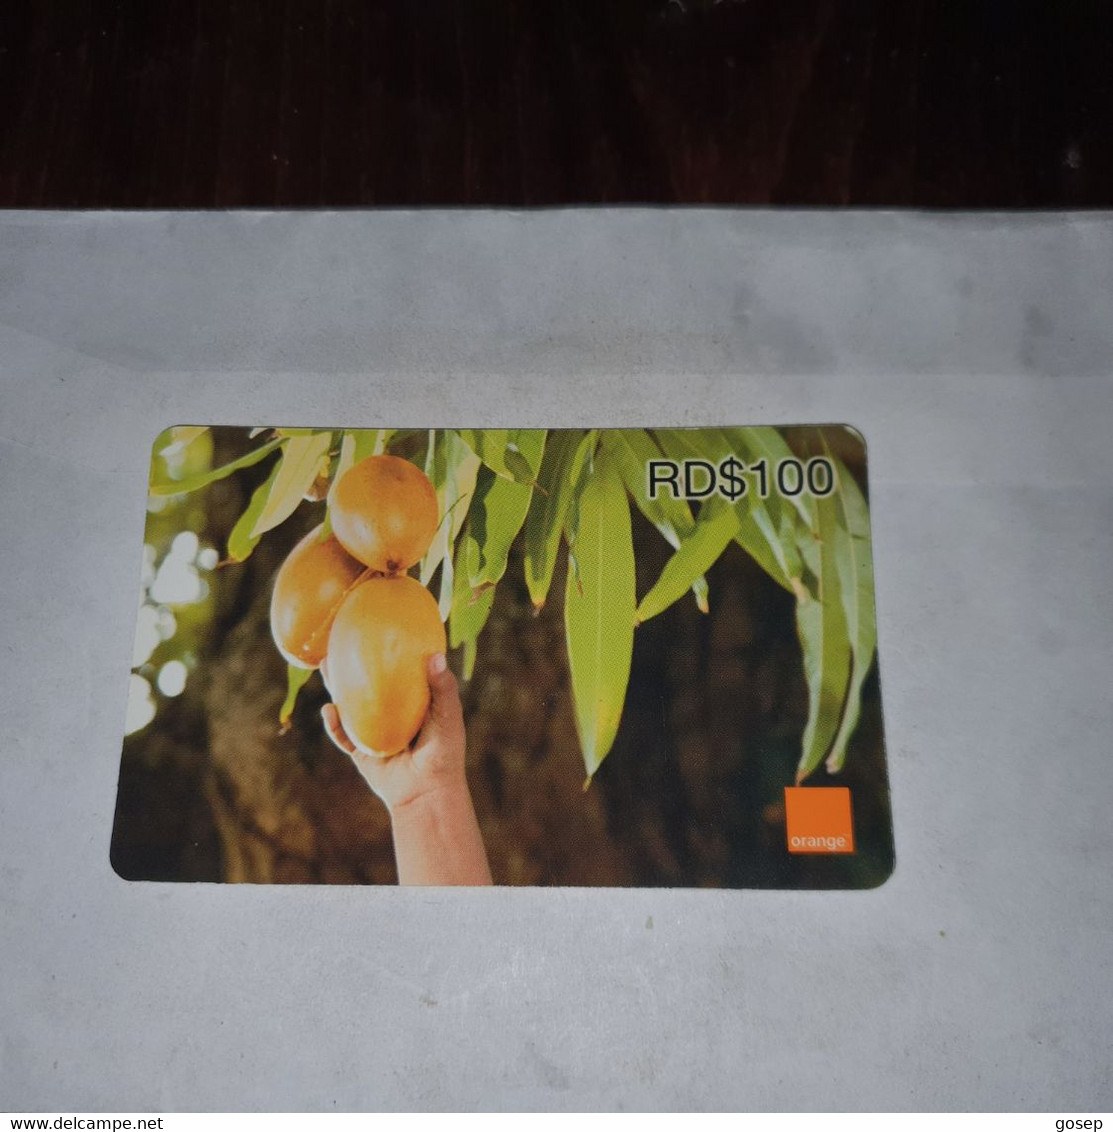 Dominicana-(orange-28rd$100)-(1786-7483-7831-62)-three Mango-(27)-(31.12.2009)-used Card+1card Prepiad Free - Dominicana